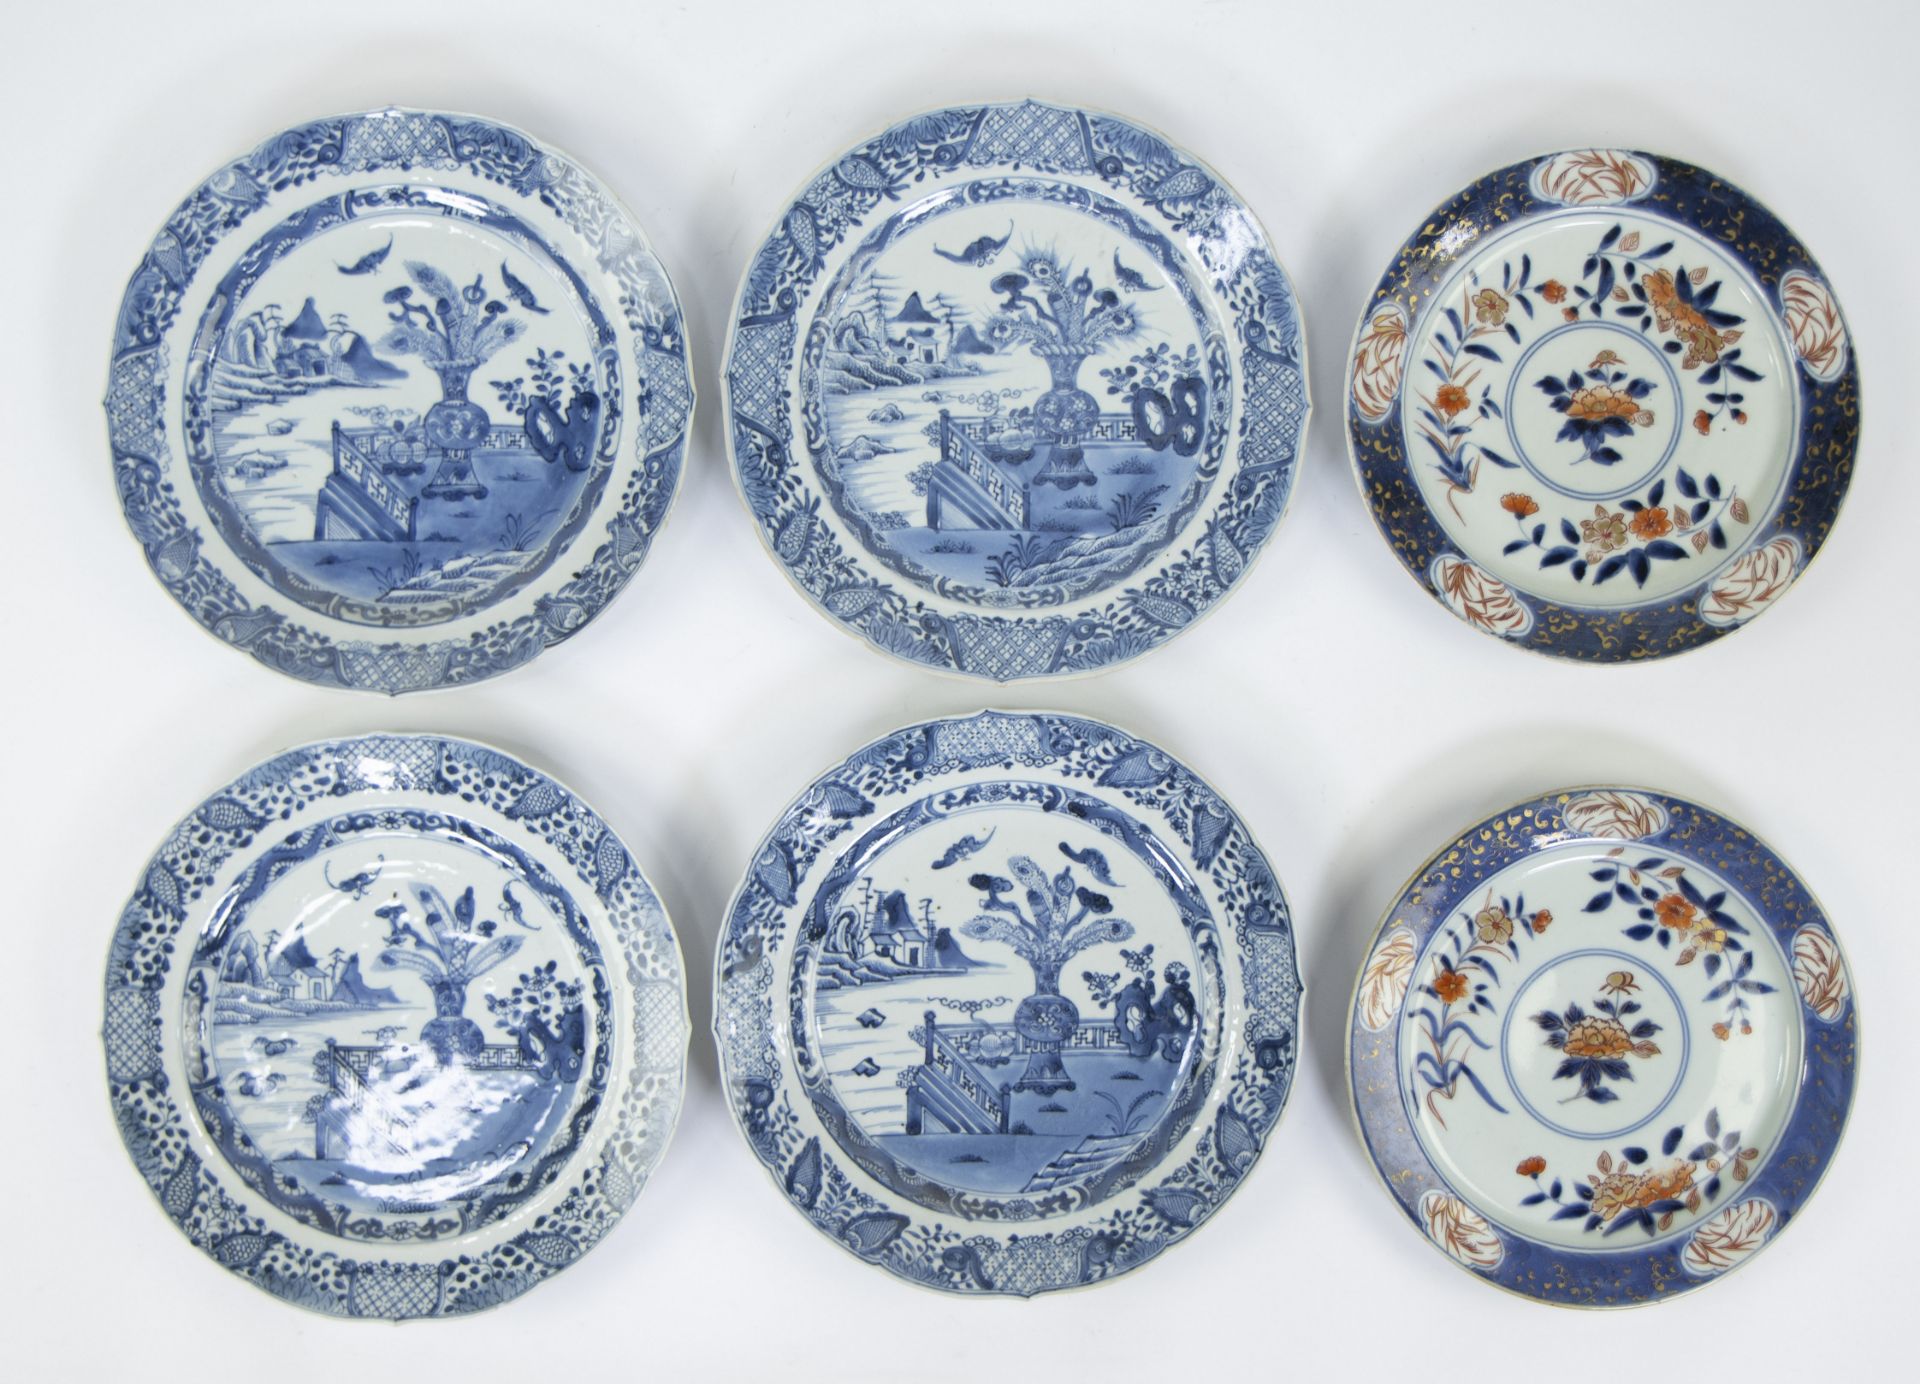 2 Chinese Imari plates and 4 blue and white plates, 18th century